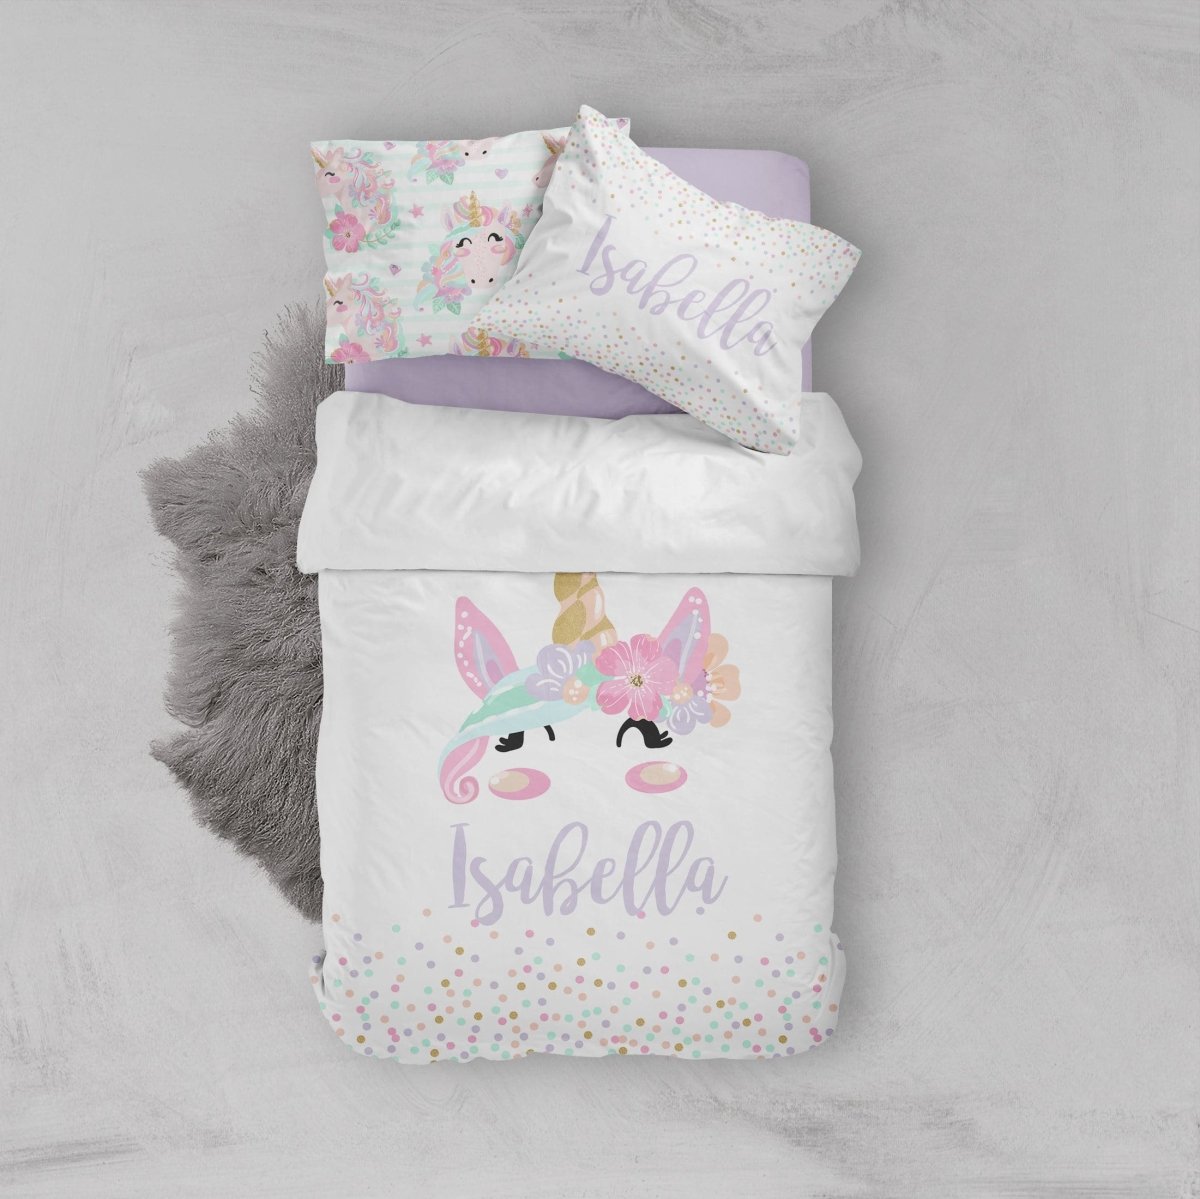 Personalized Unicorn Kids Bedding Set (Comforter or Duvet Cover) - text, Unicorn Dreams,